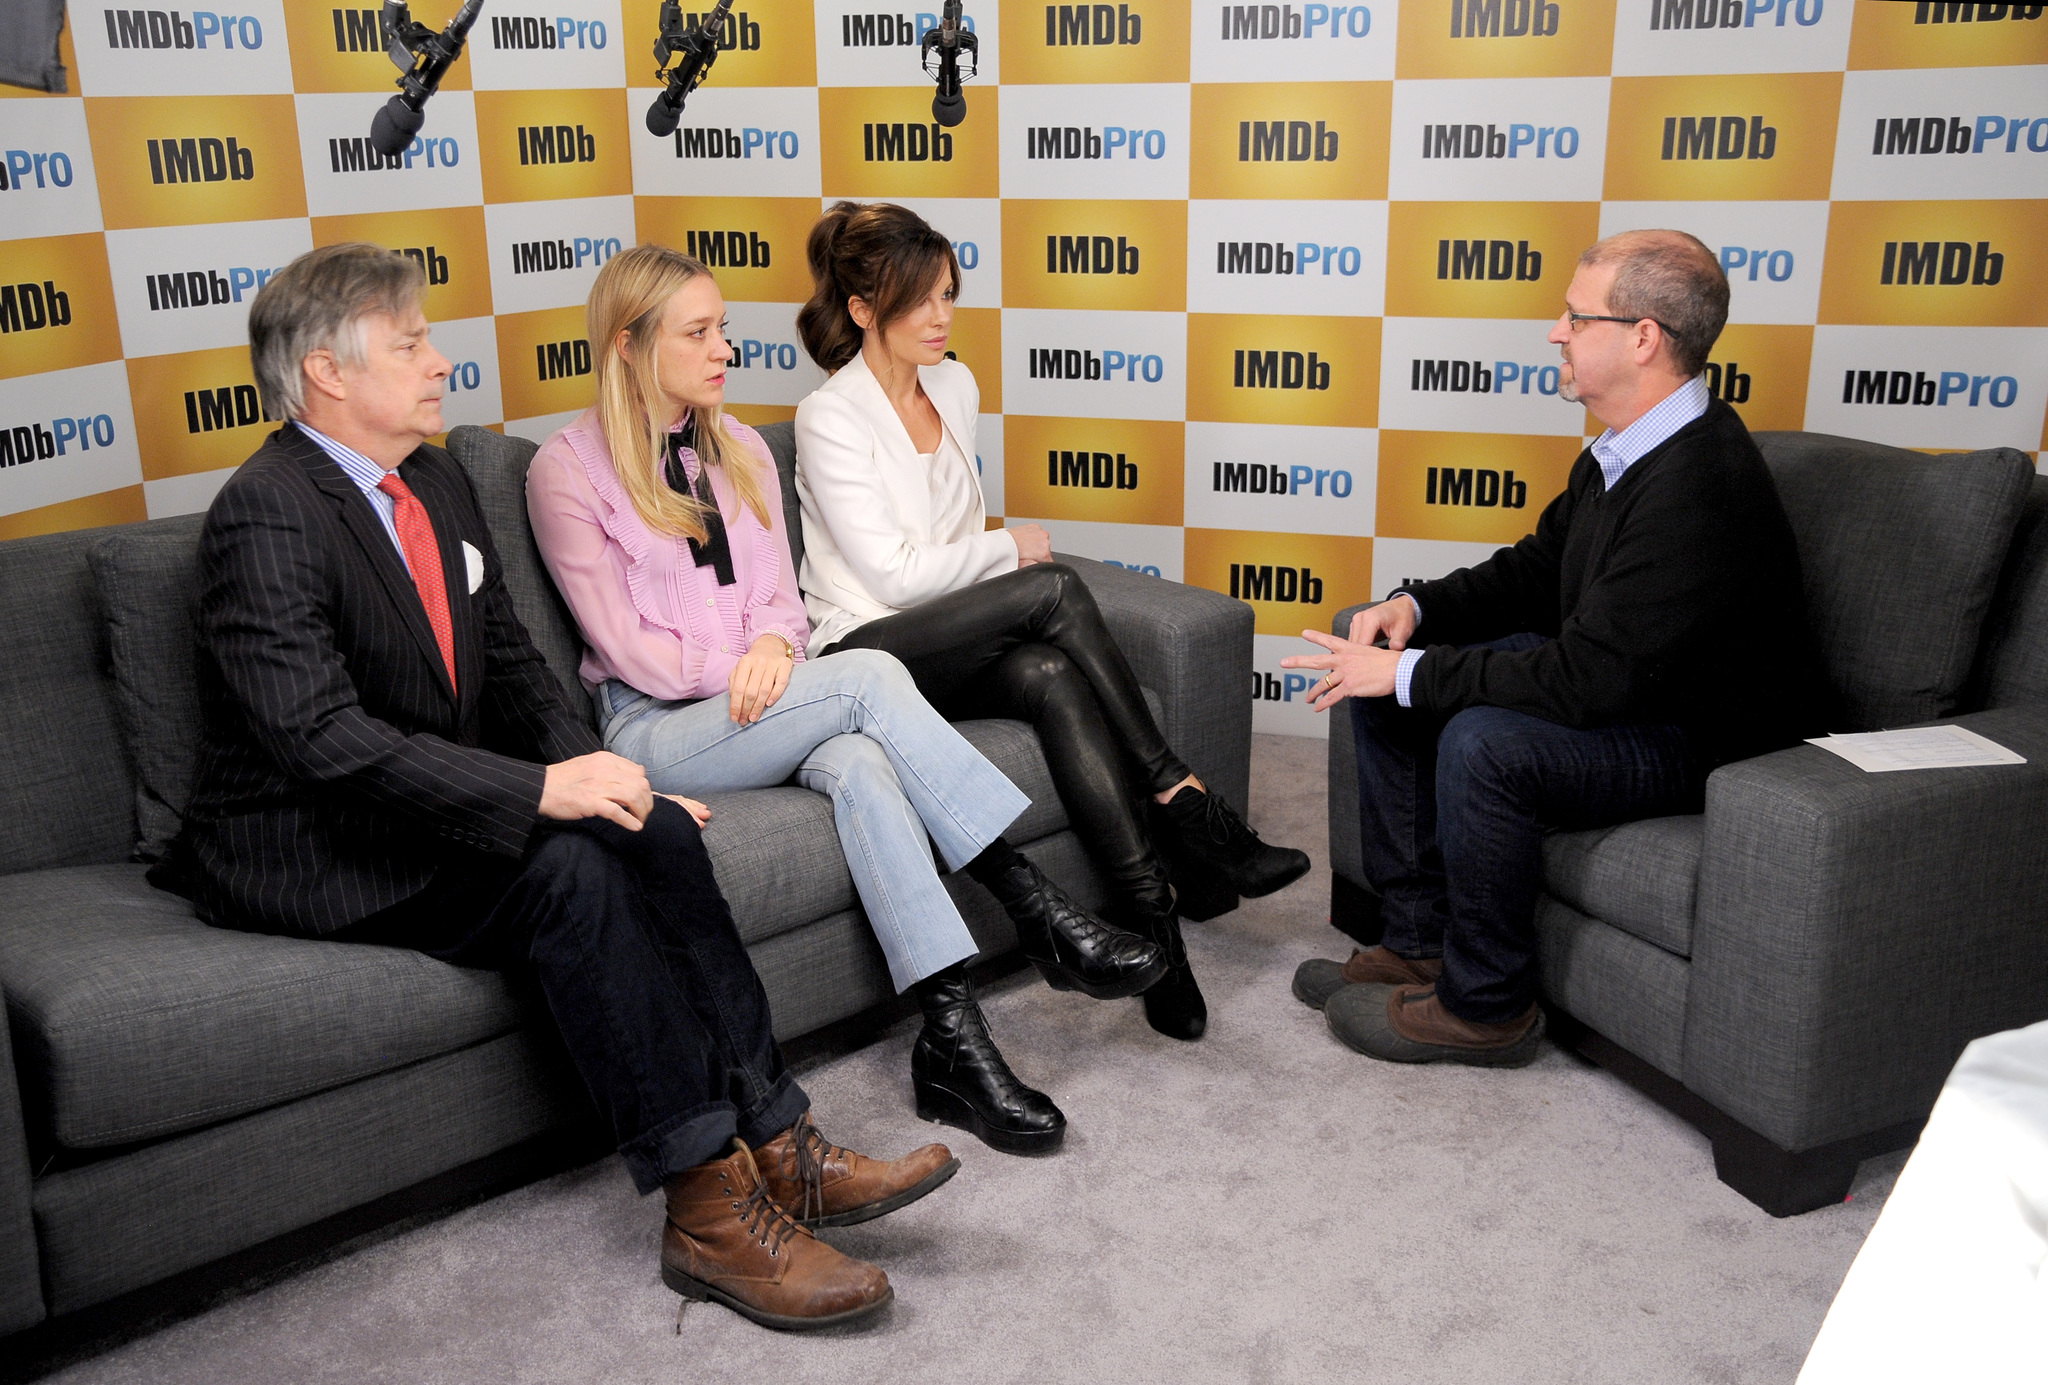 Kate Beckinsale, Chloë Sevigny, Whit Stillman and Keith Simanton at event of The IMDb Studio (2015)